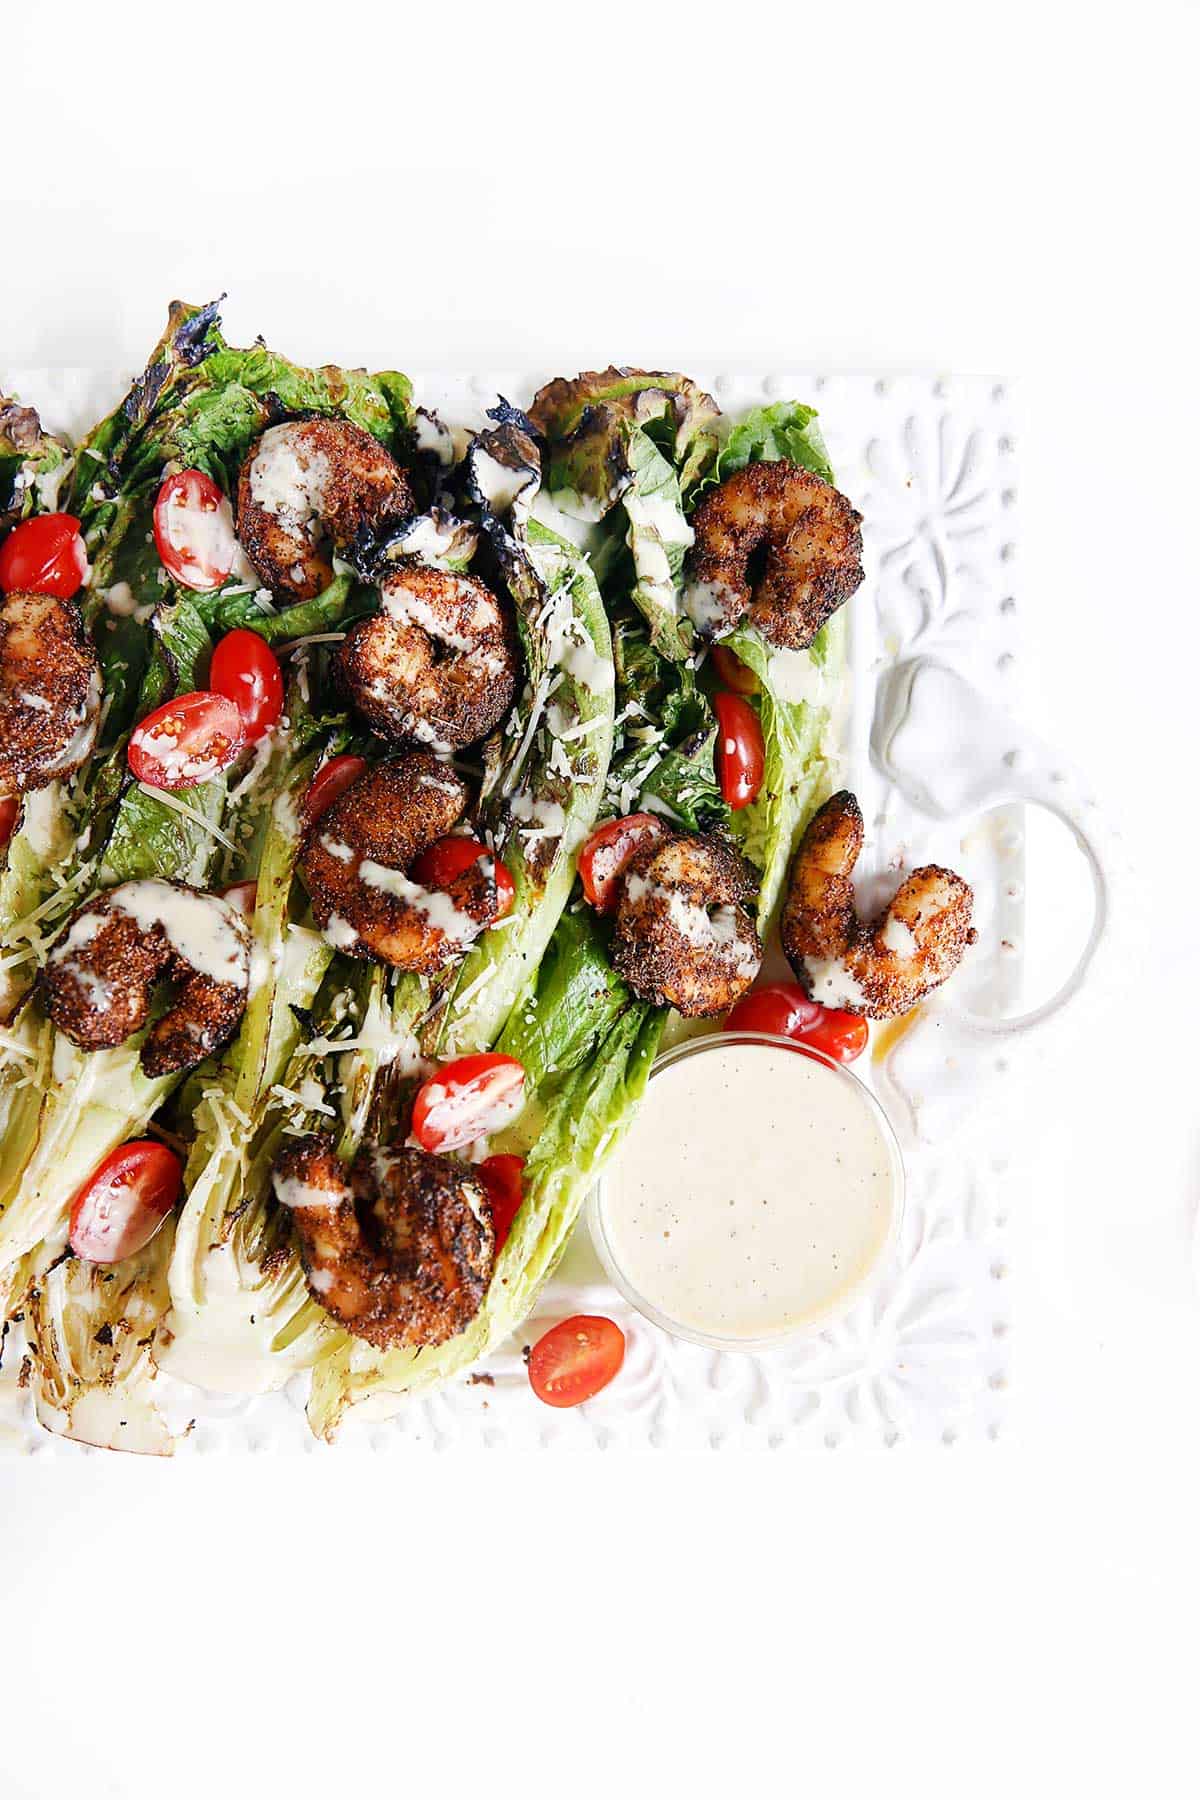 Grilled Caesar Salad With Blackened Shrimp (Grain-free, paleo-friendly, gluten-free) | Lexi's Clean Kitchen